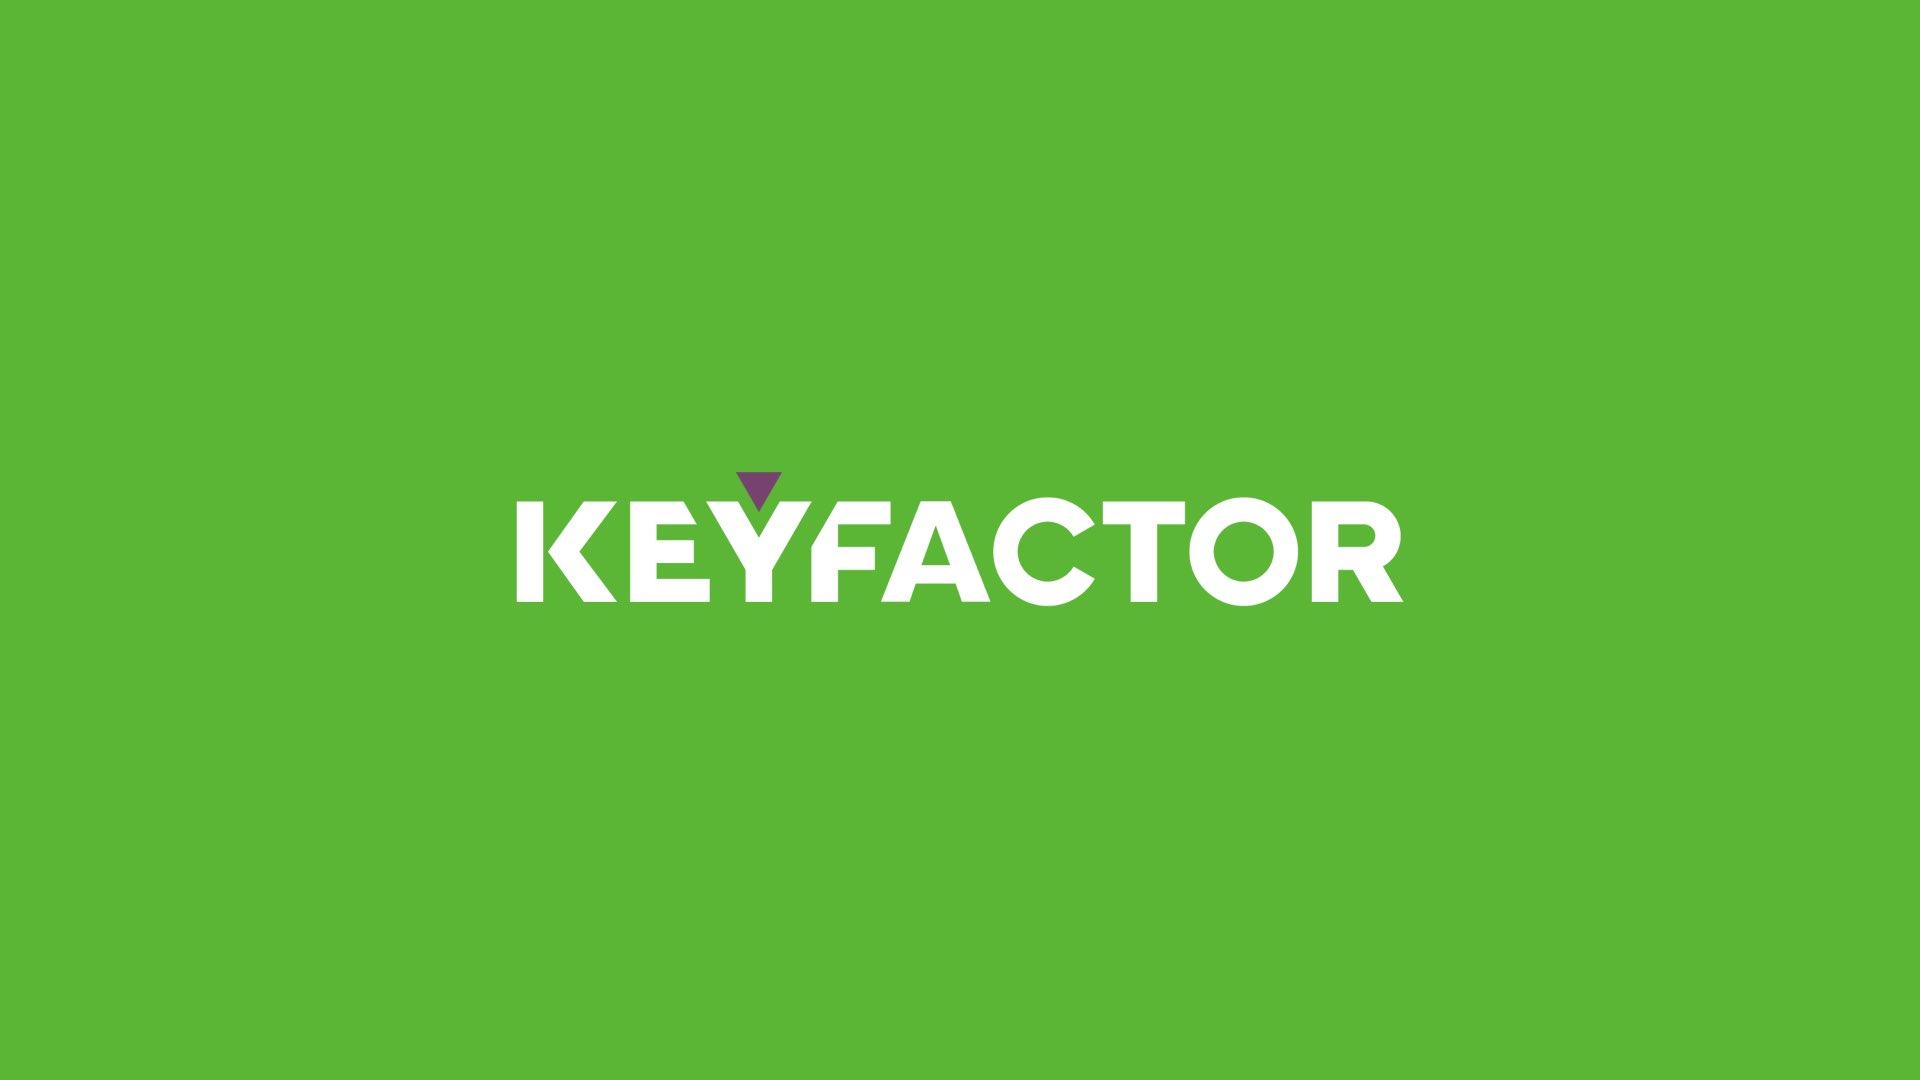 Keyfactor Logo On Green